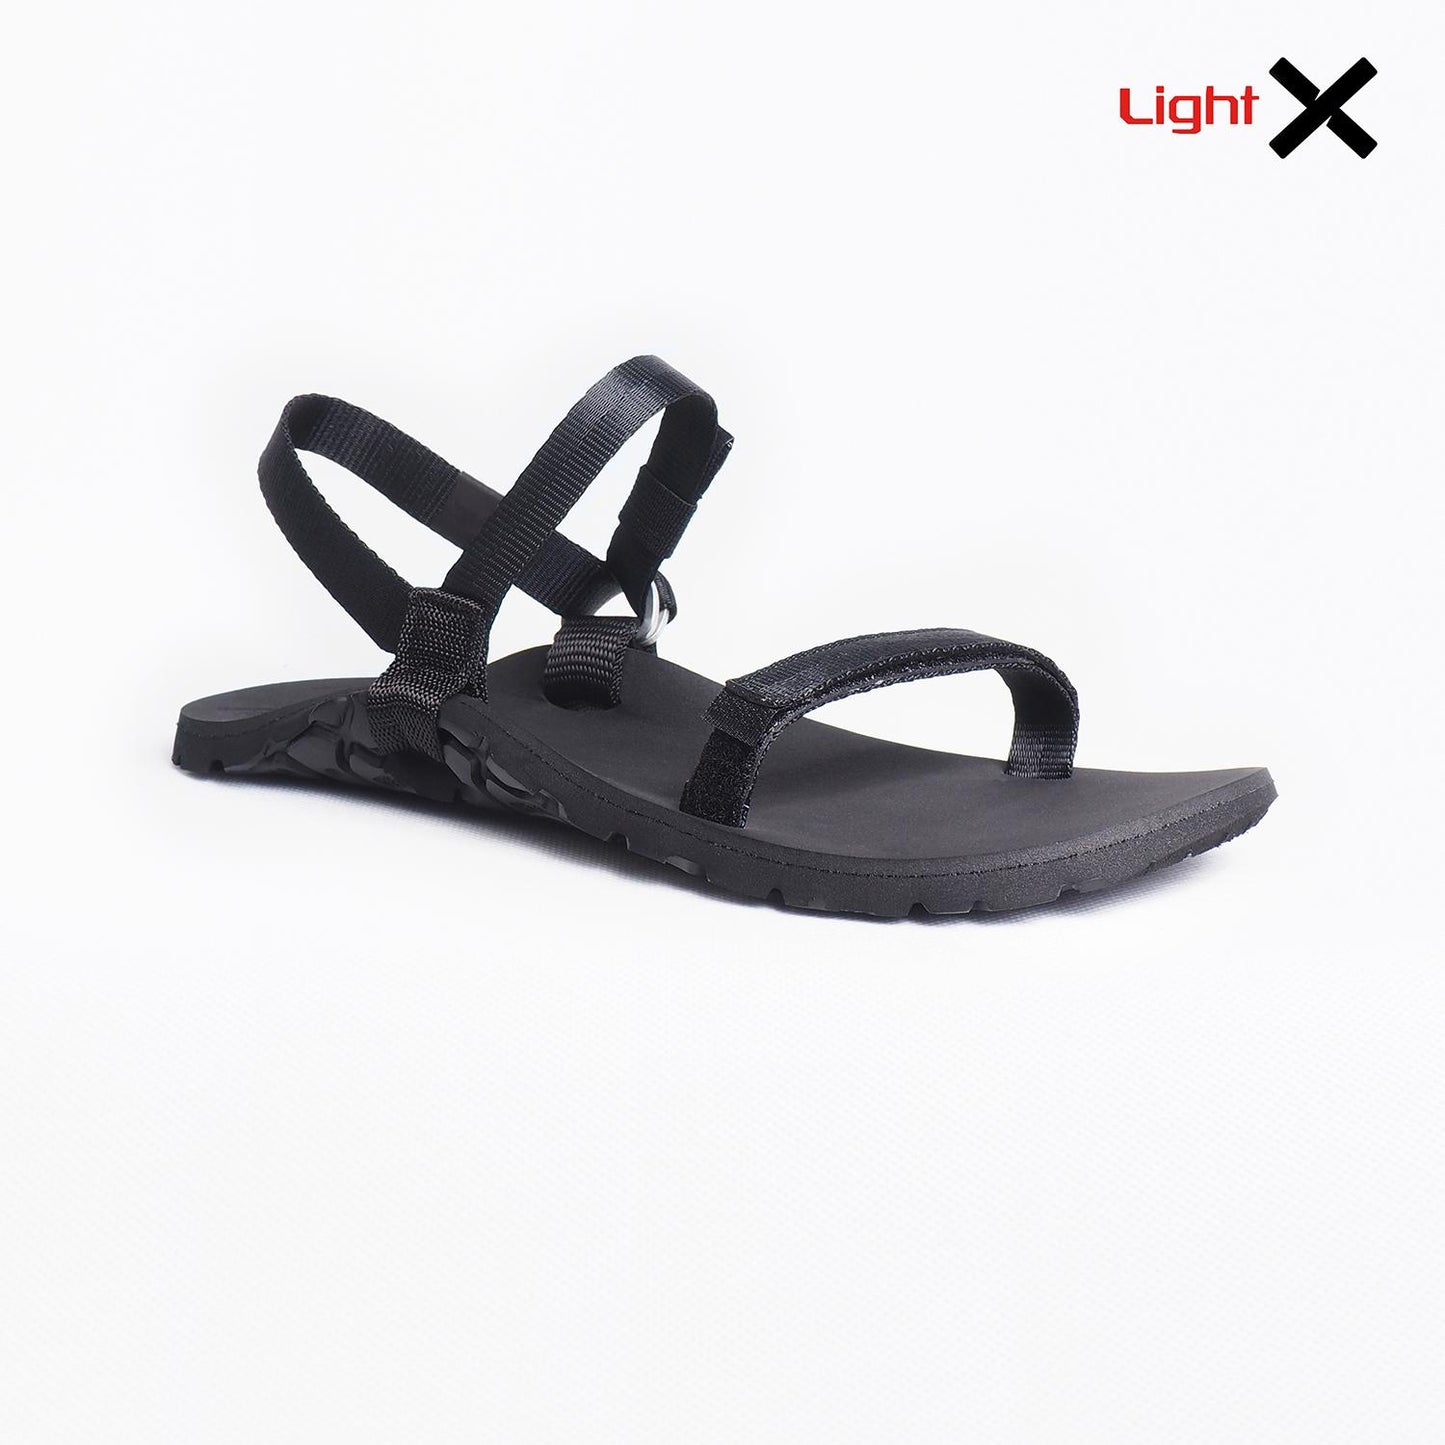 Bosky Light X Sandal